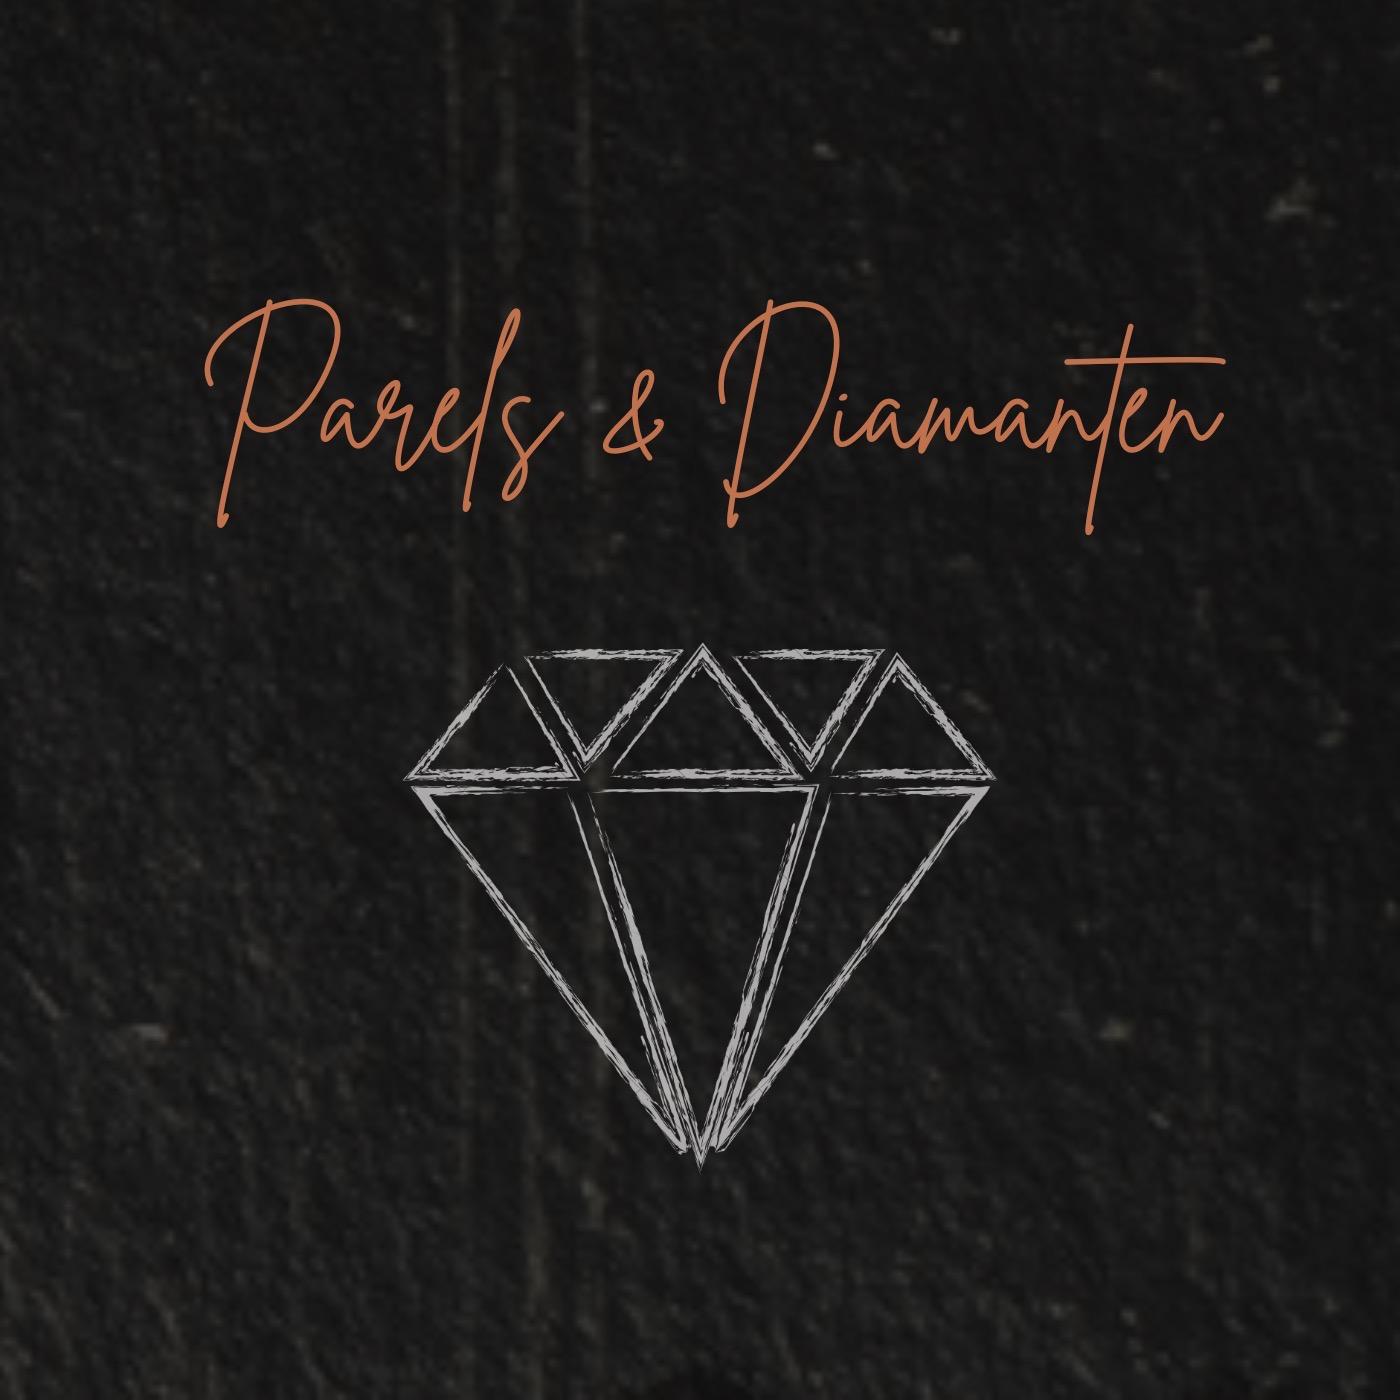 Parels & Diamanten